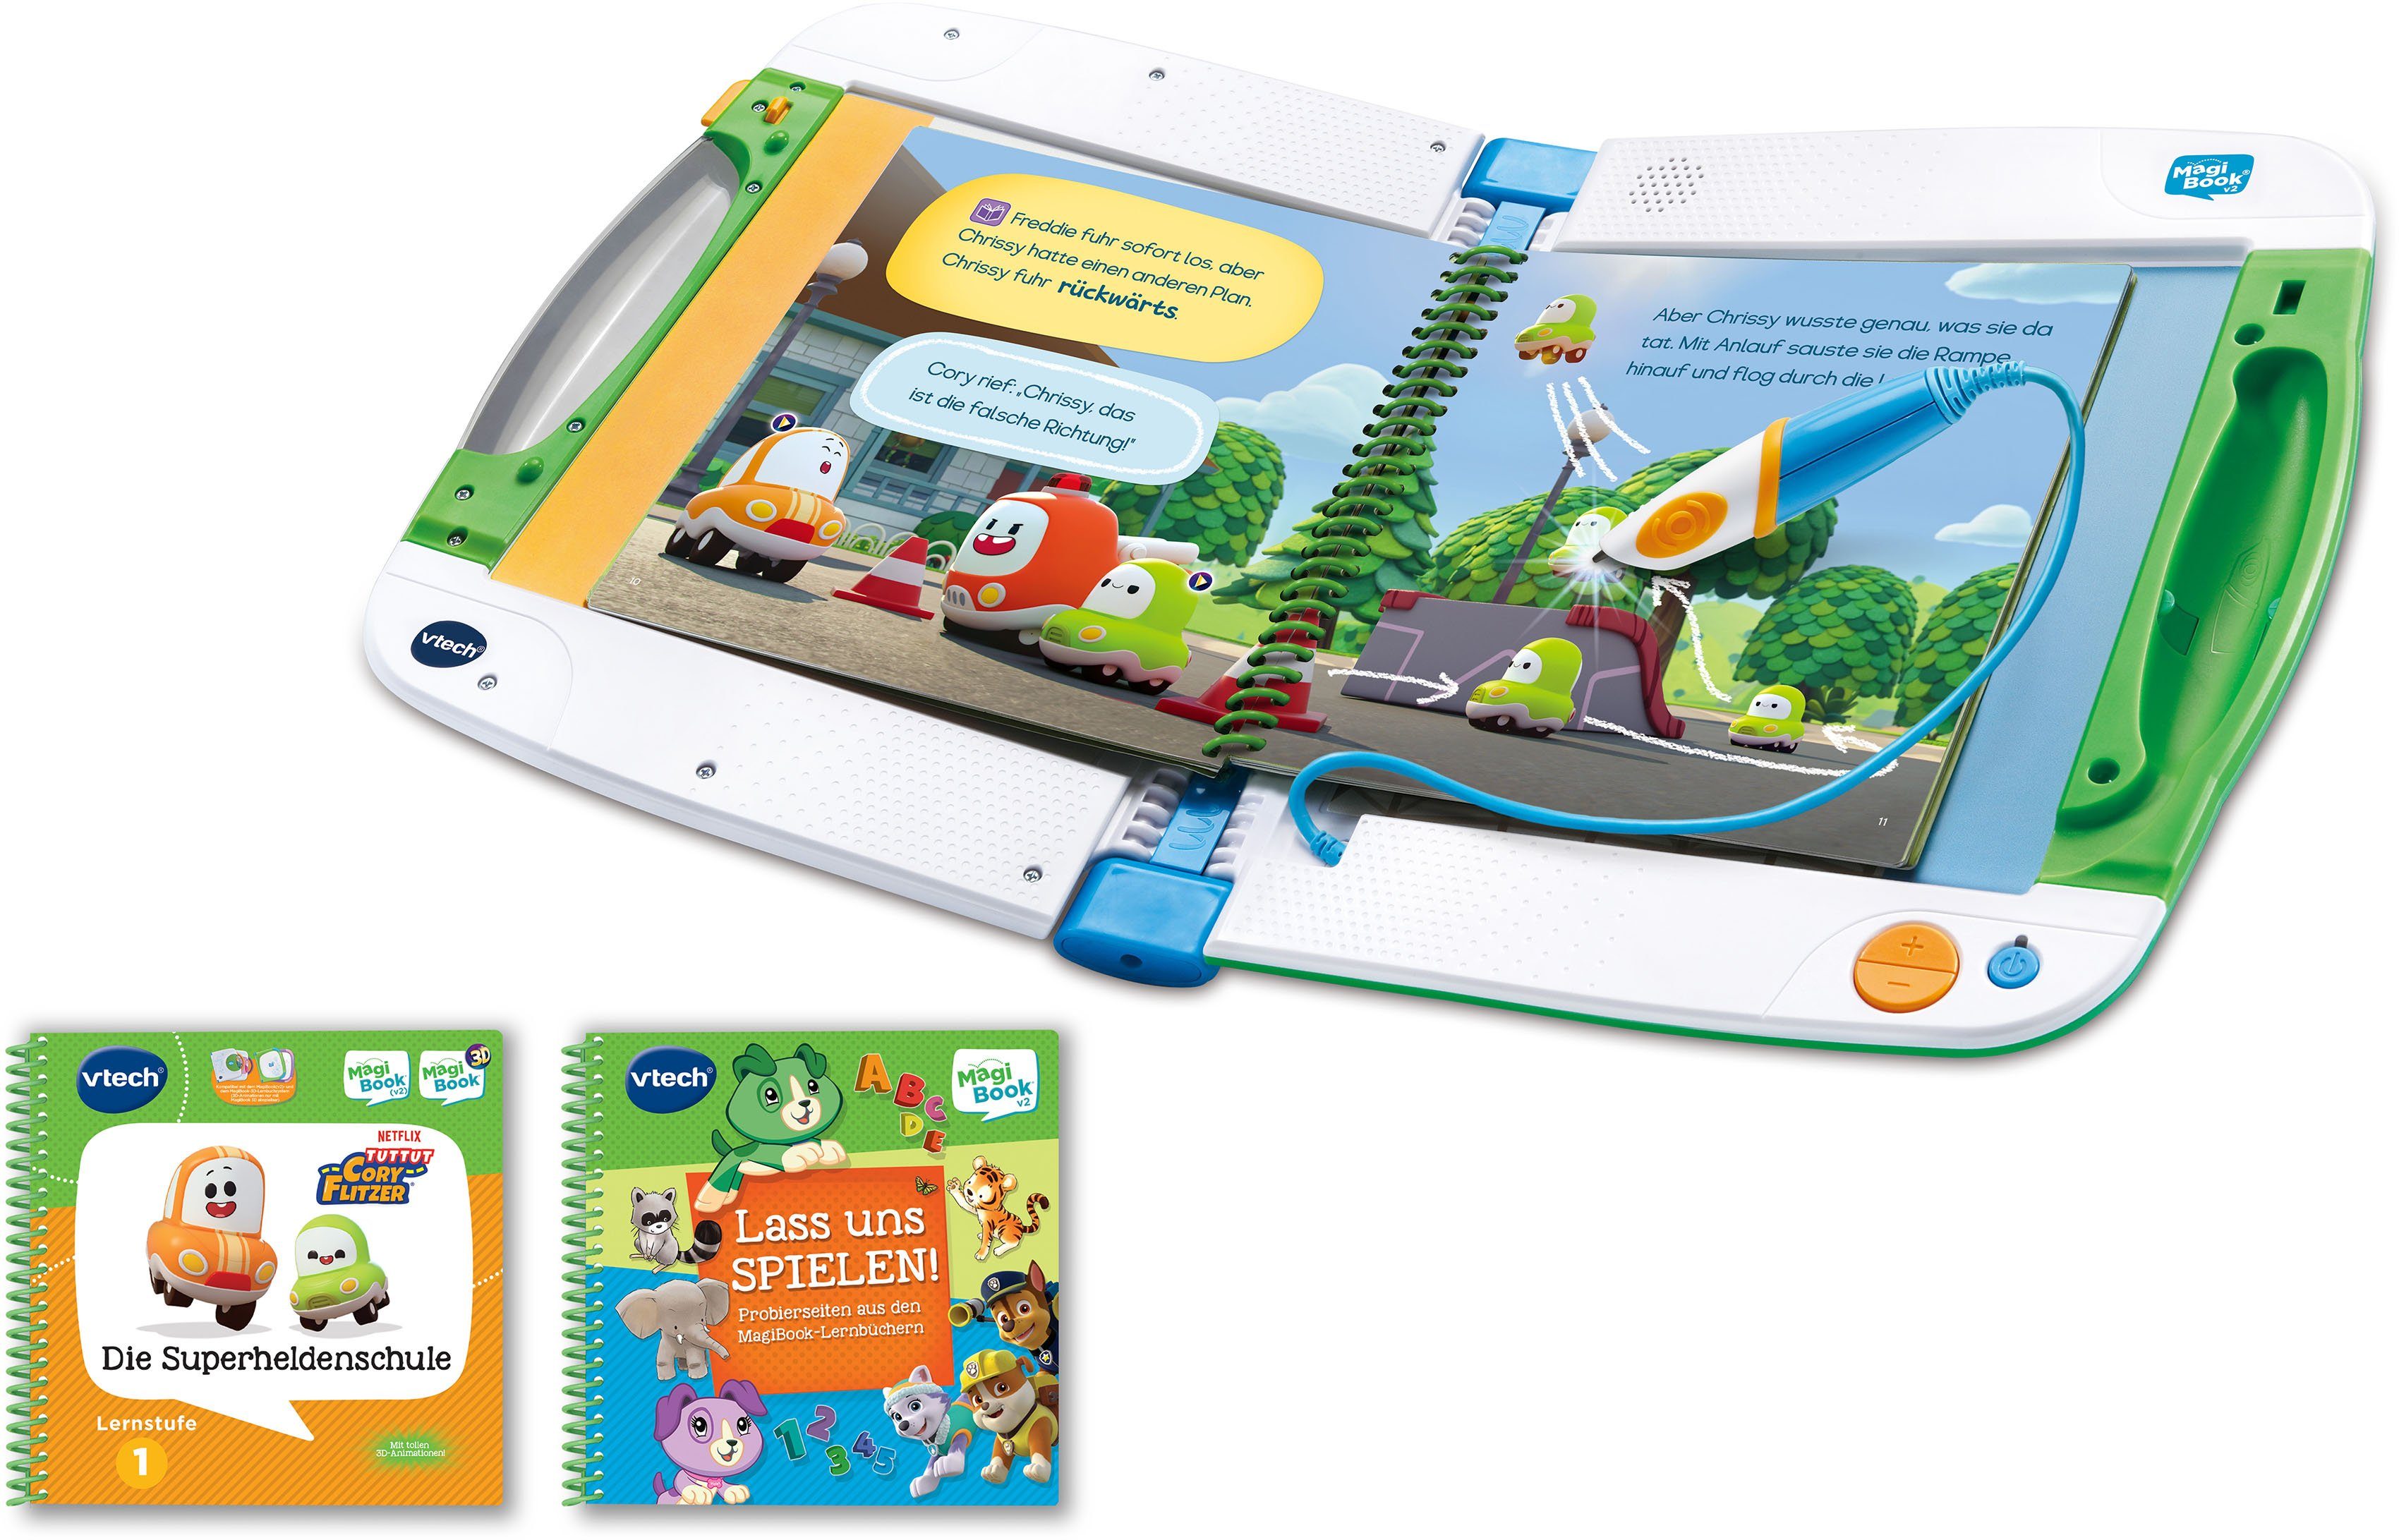 v2, 2 mit Lernbüchern MagiBook Lernbuchsystem, Kindercomputer Interaktives Vtech®